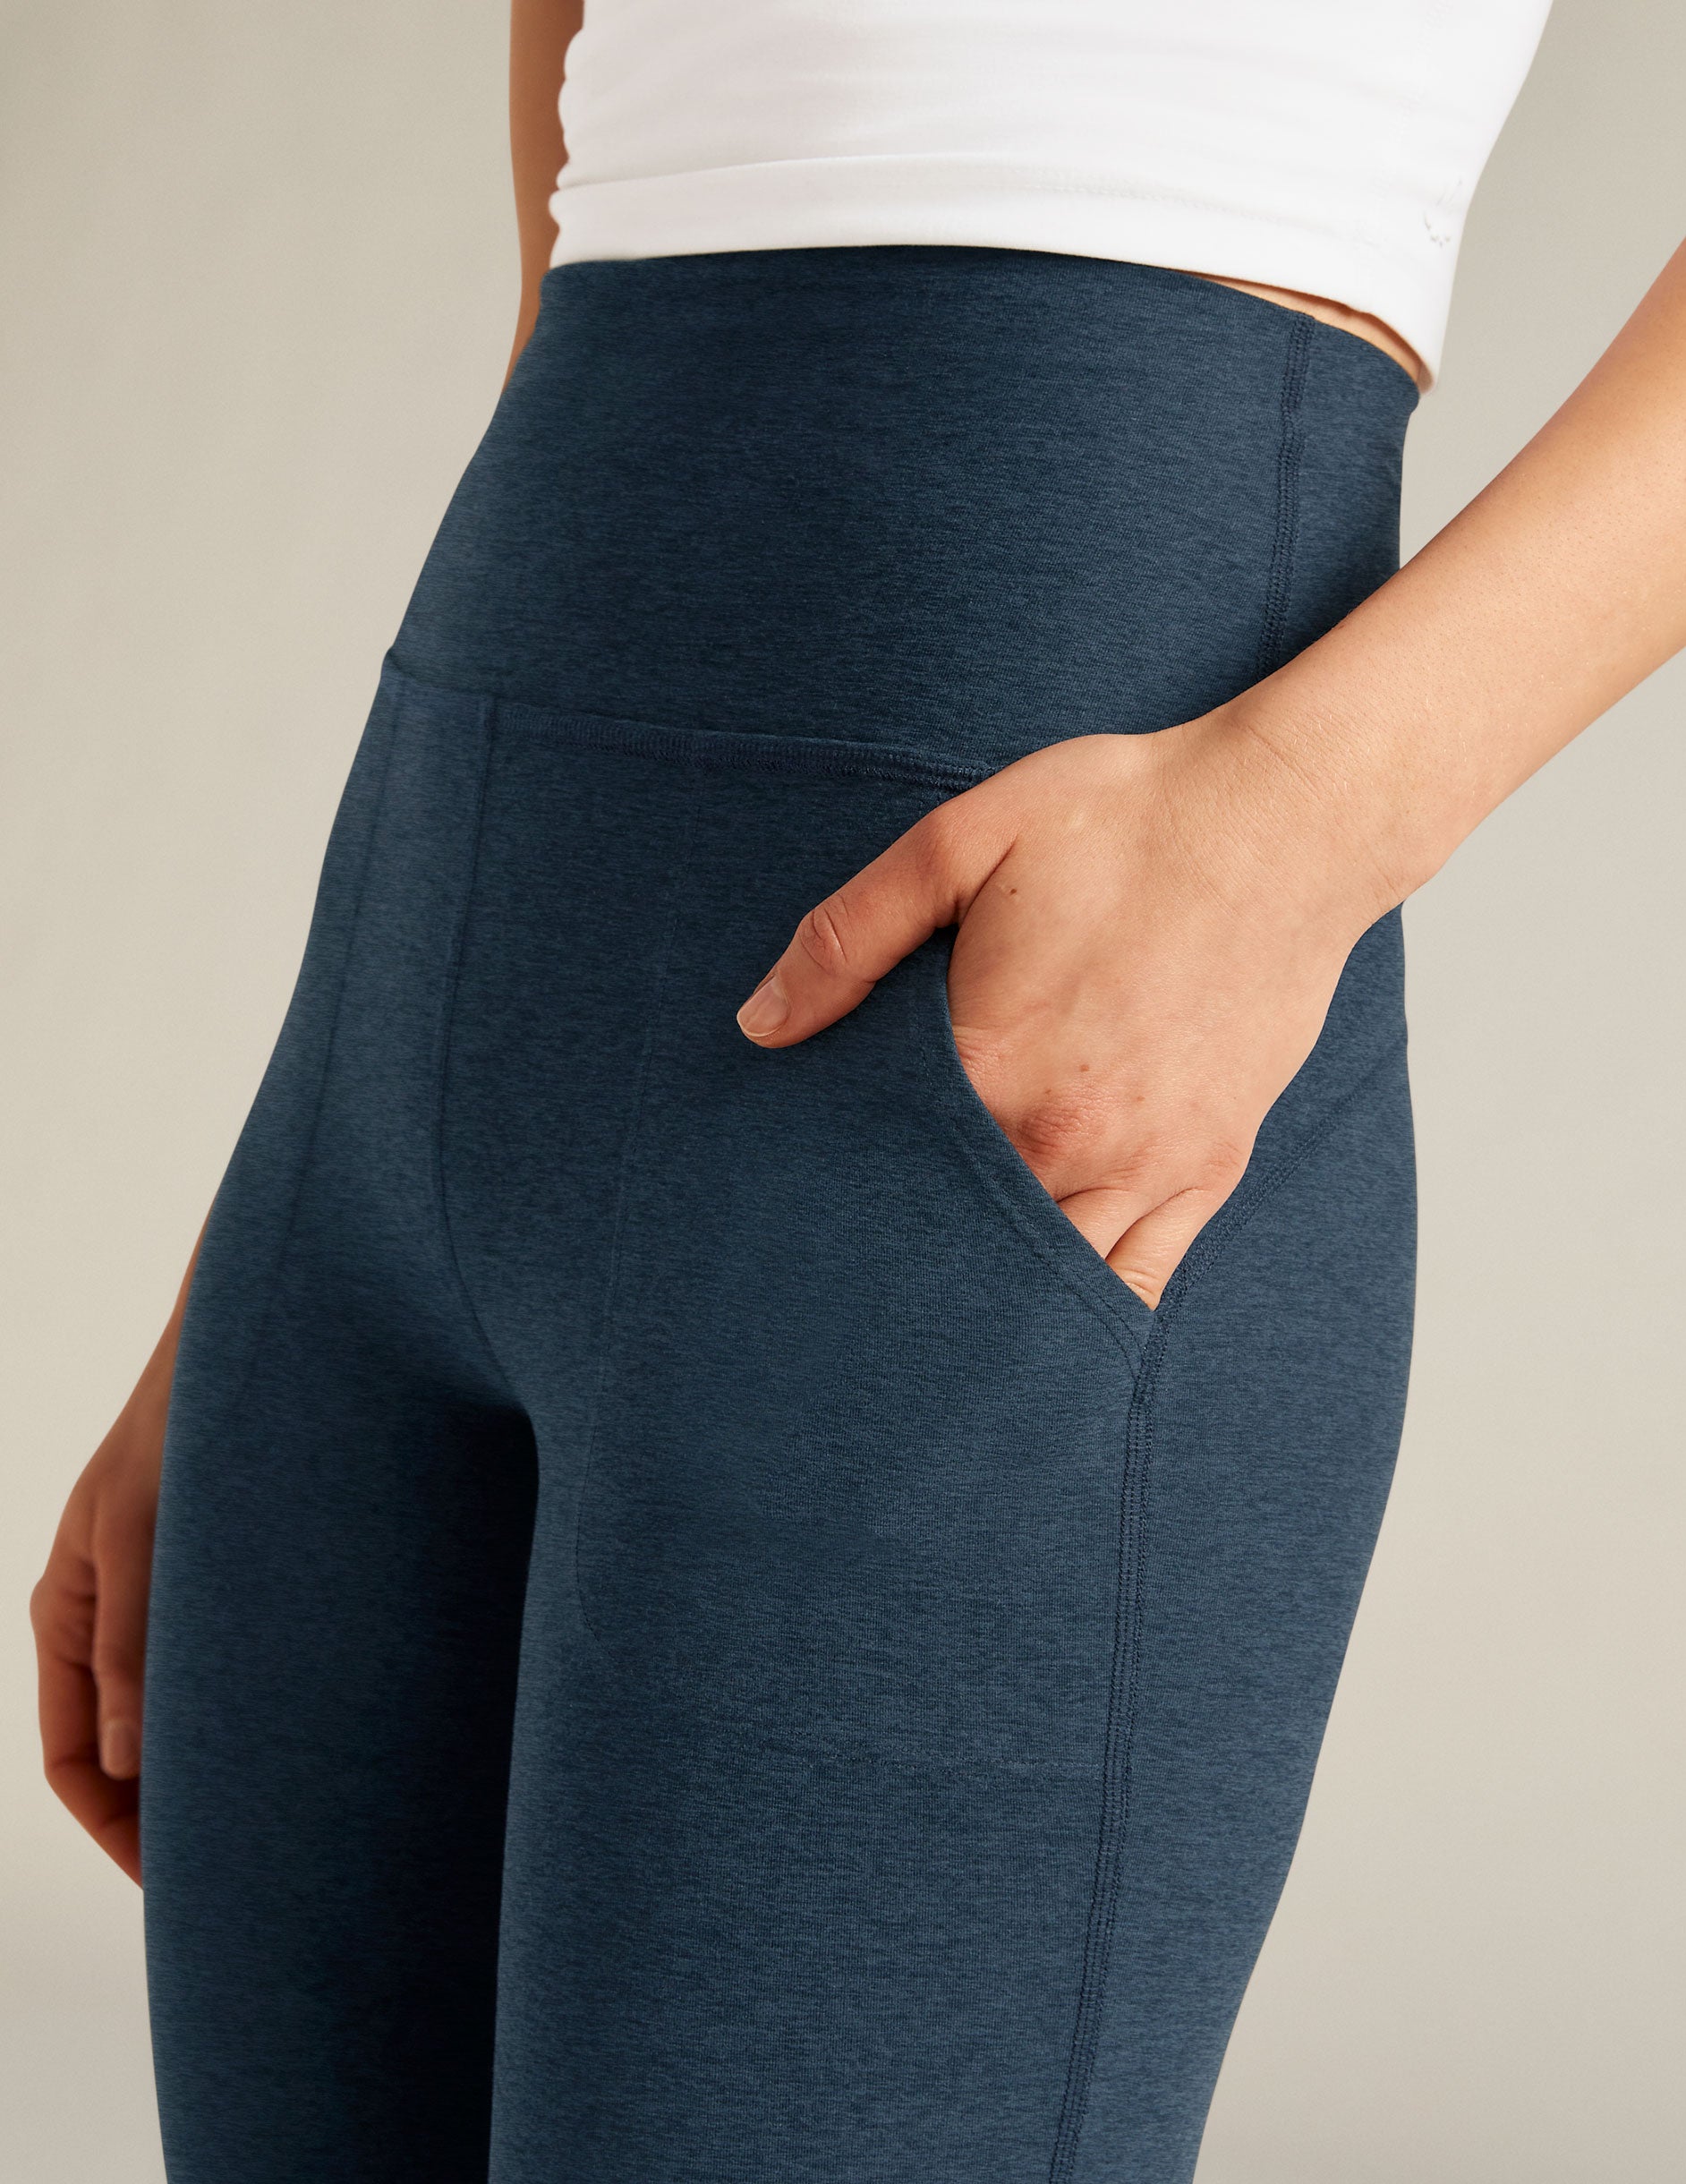  AXESEA Women's High Waist Yoga Pants Compression